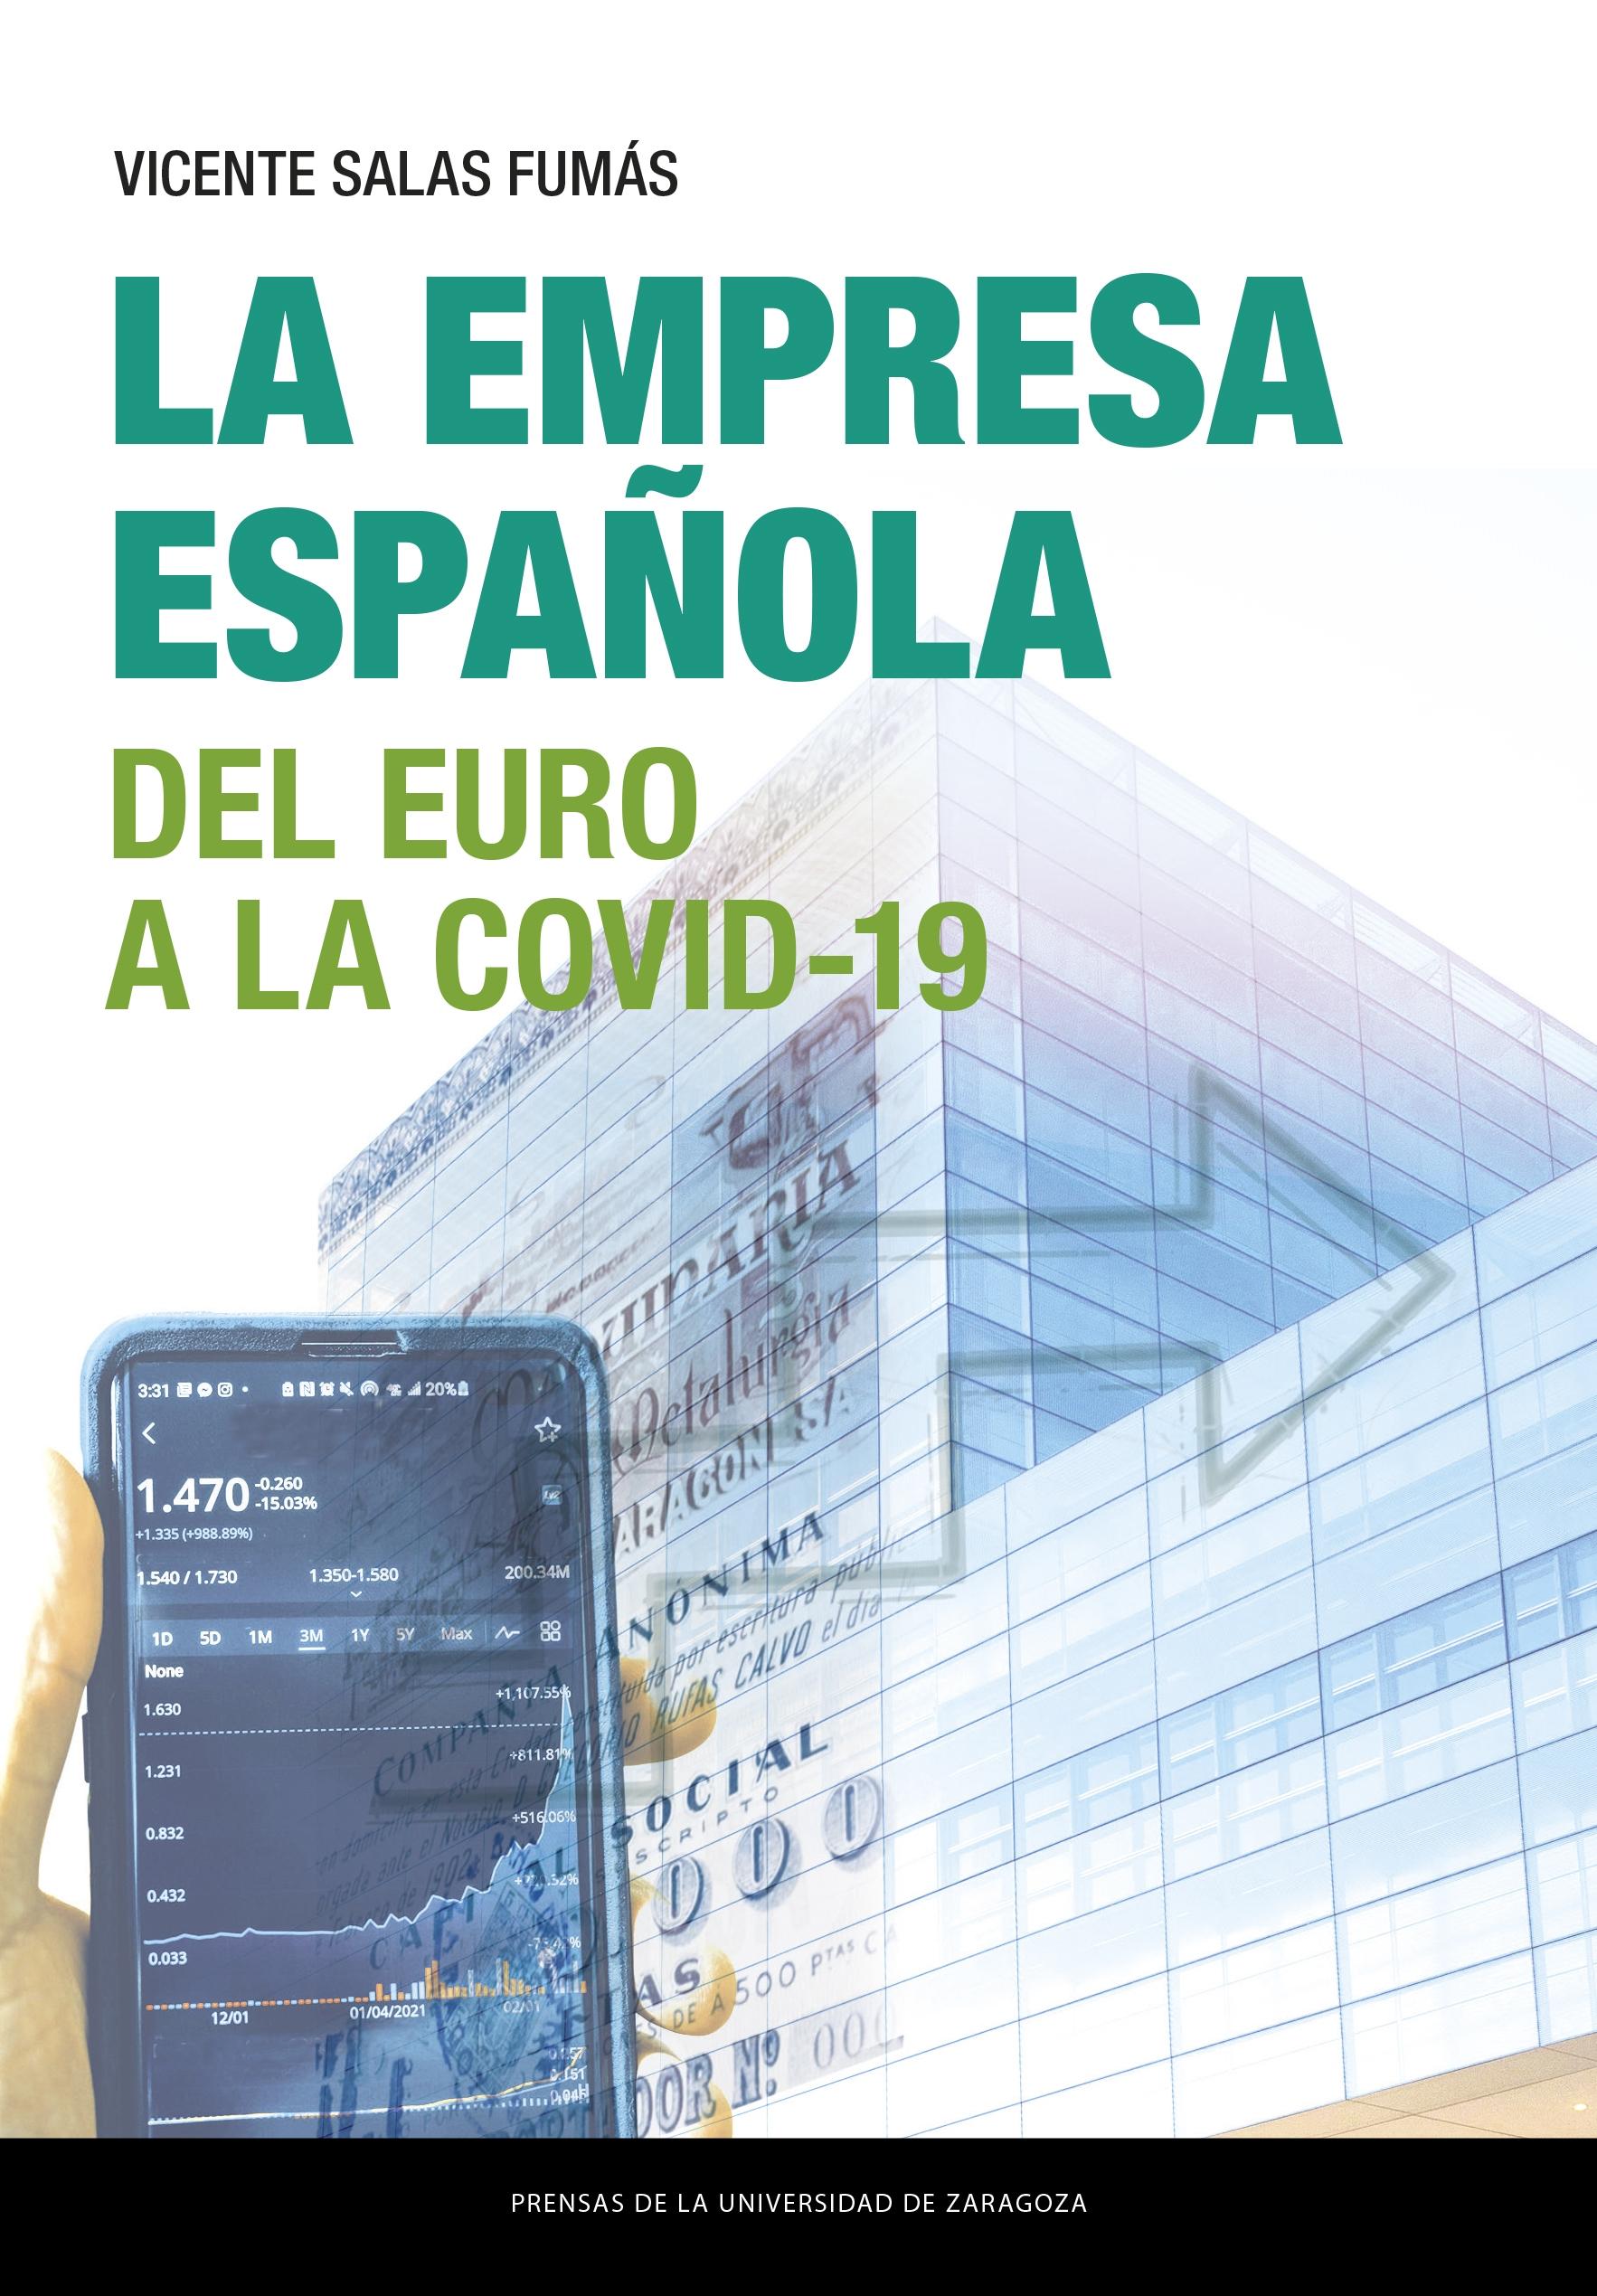 La empresa española "Del Euro a la COVID-19"